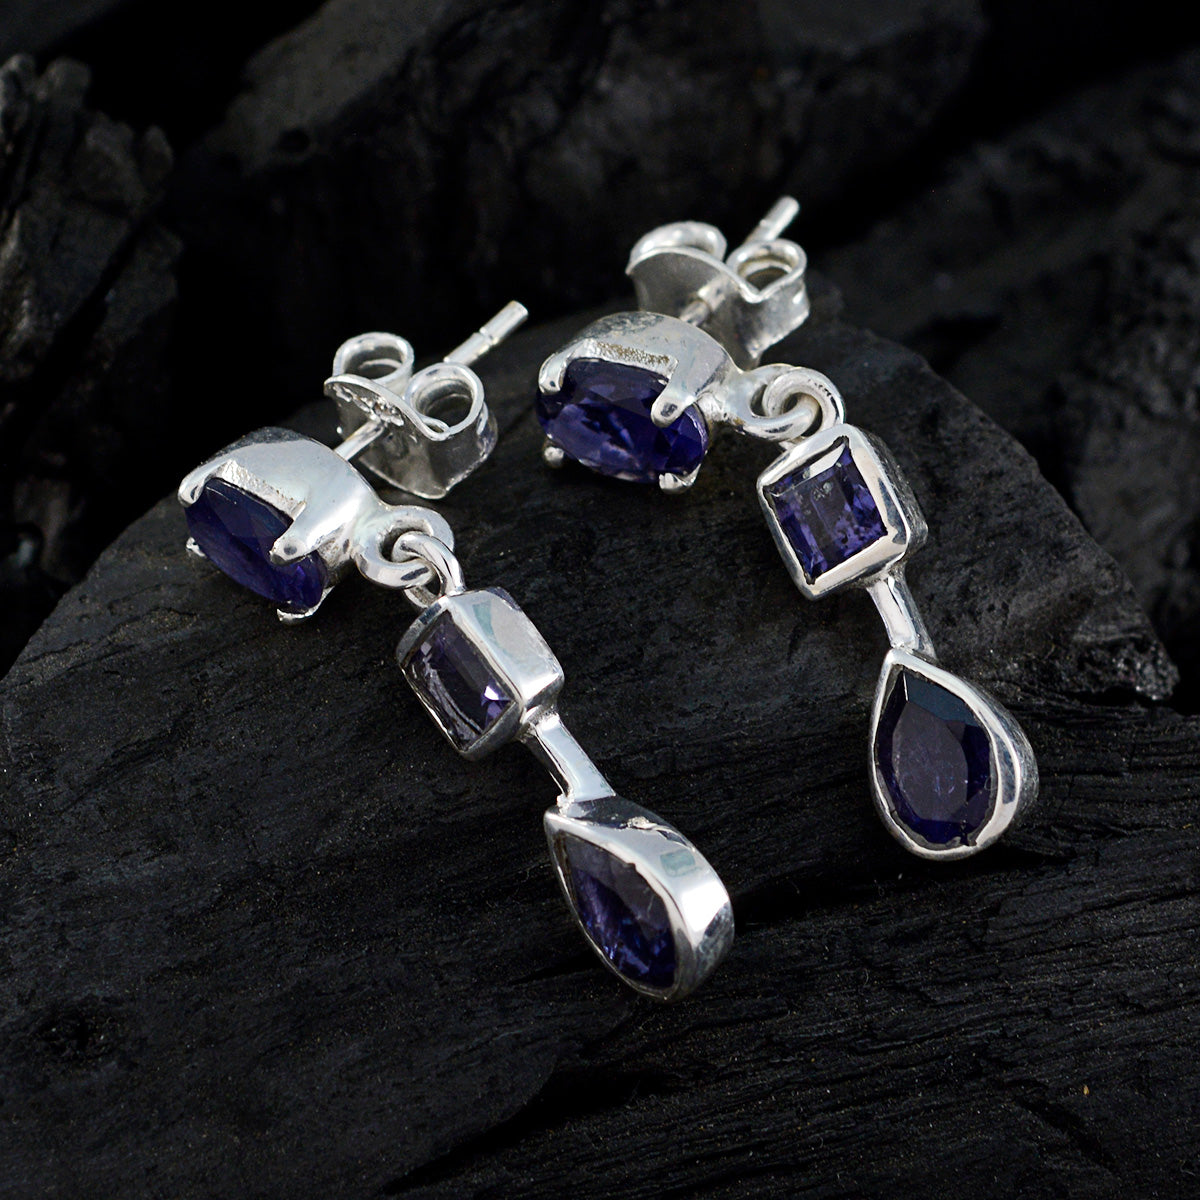 Riyo Real Gemstones multi shape Faceted Nevy Blue Iolite Silver Earrings gift for graduation